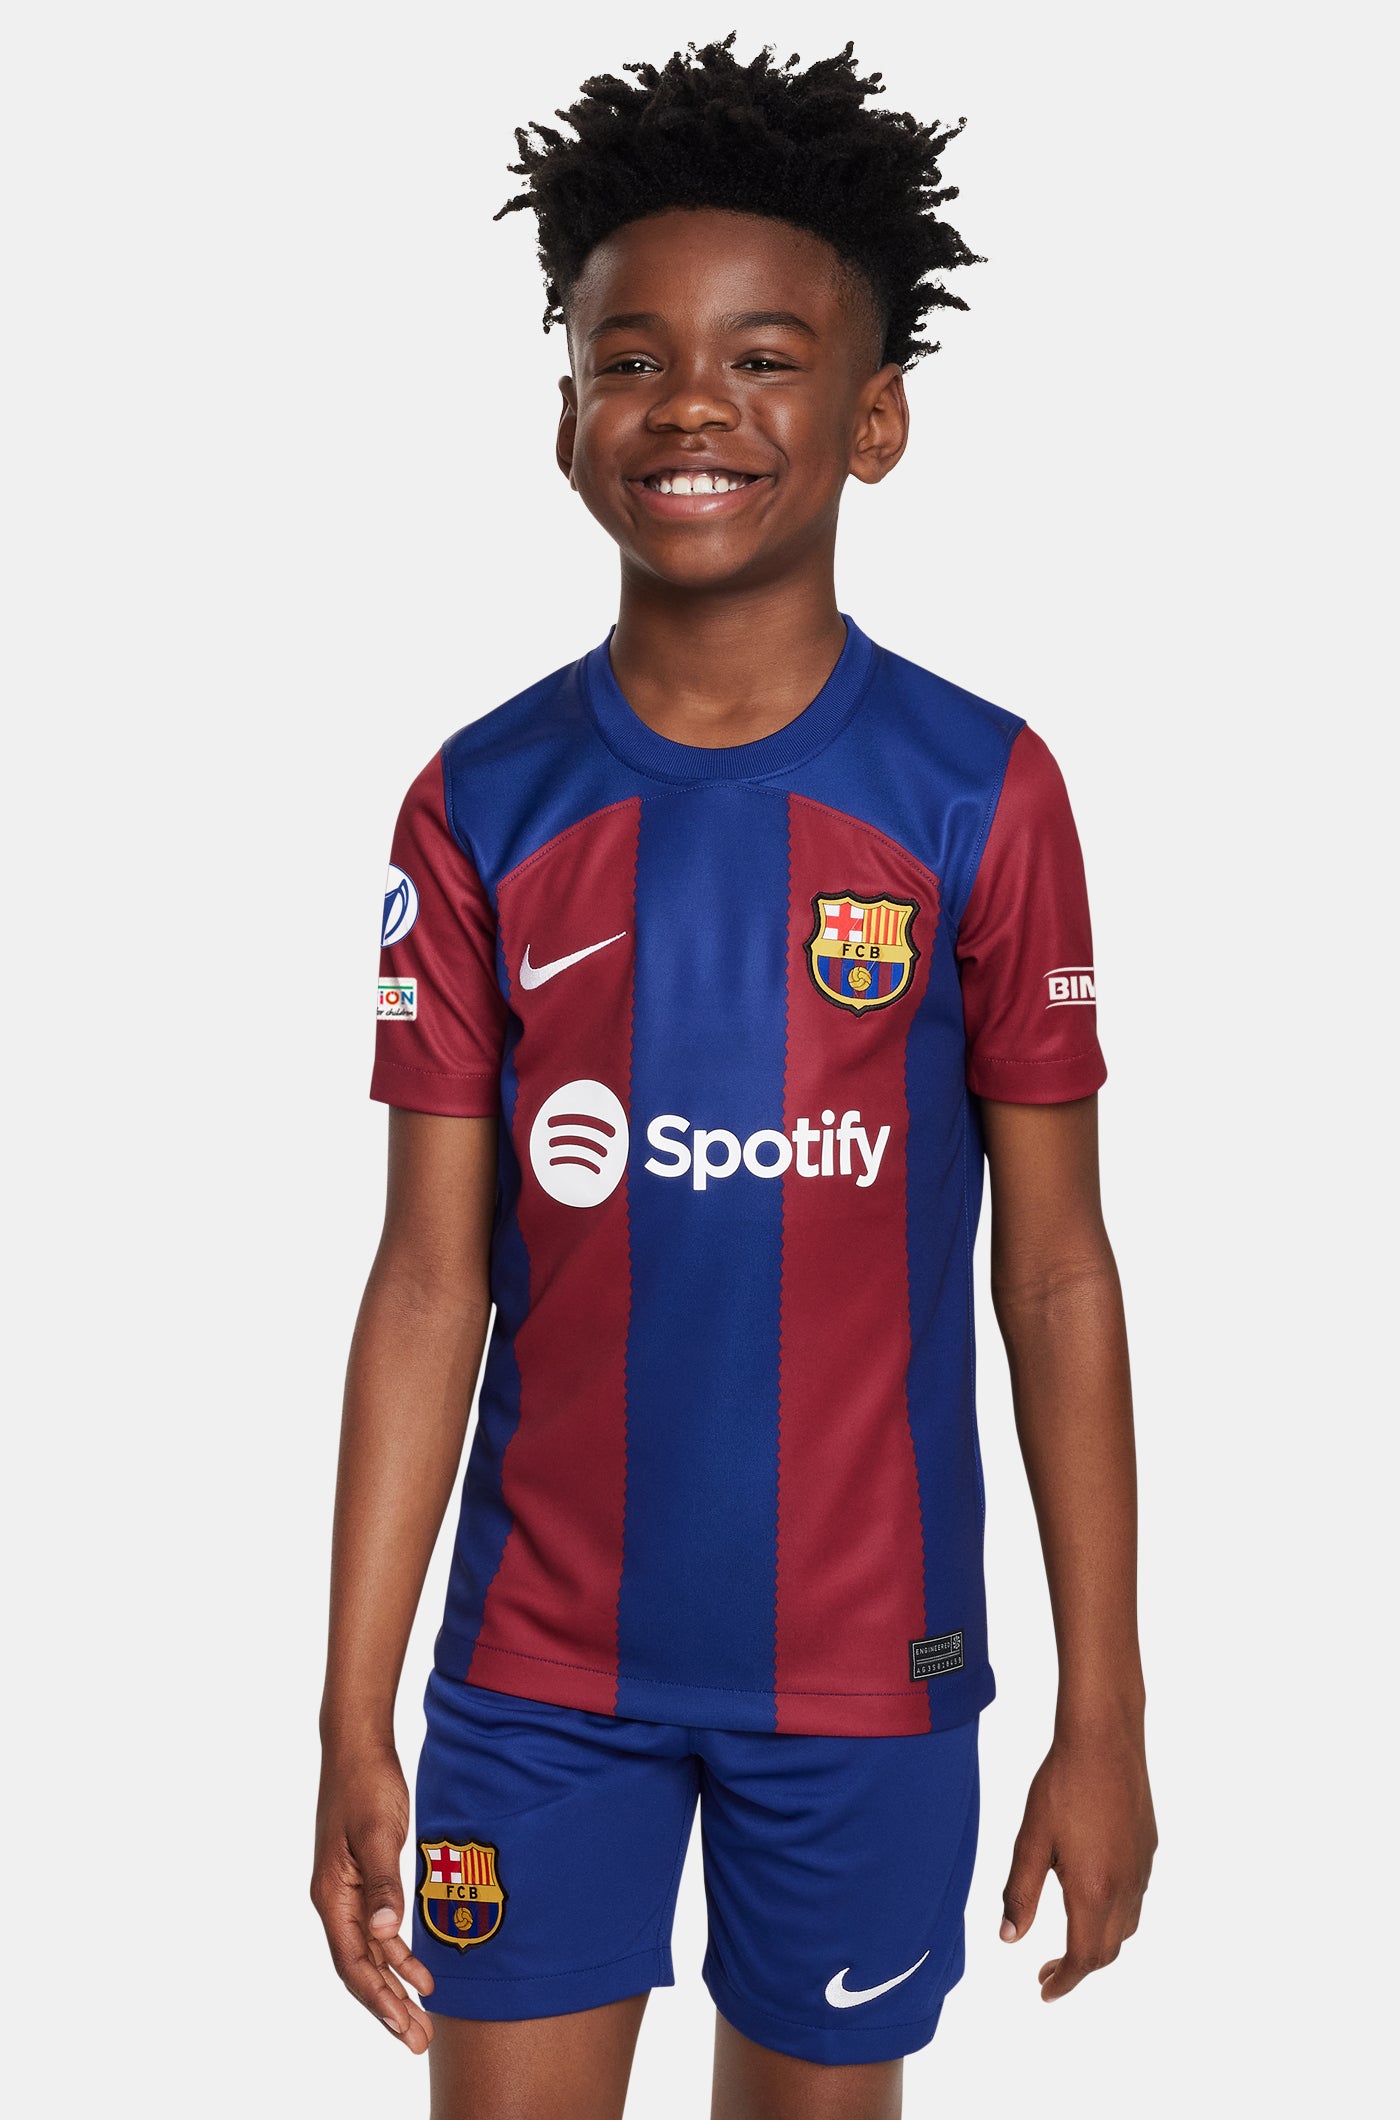 UWCL FC Barcelona home shirt 23/24 - Junior - MARTA